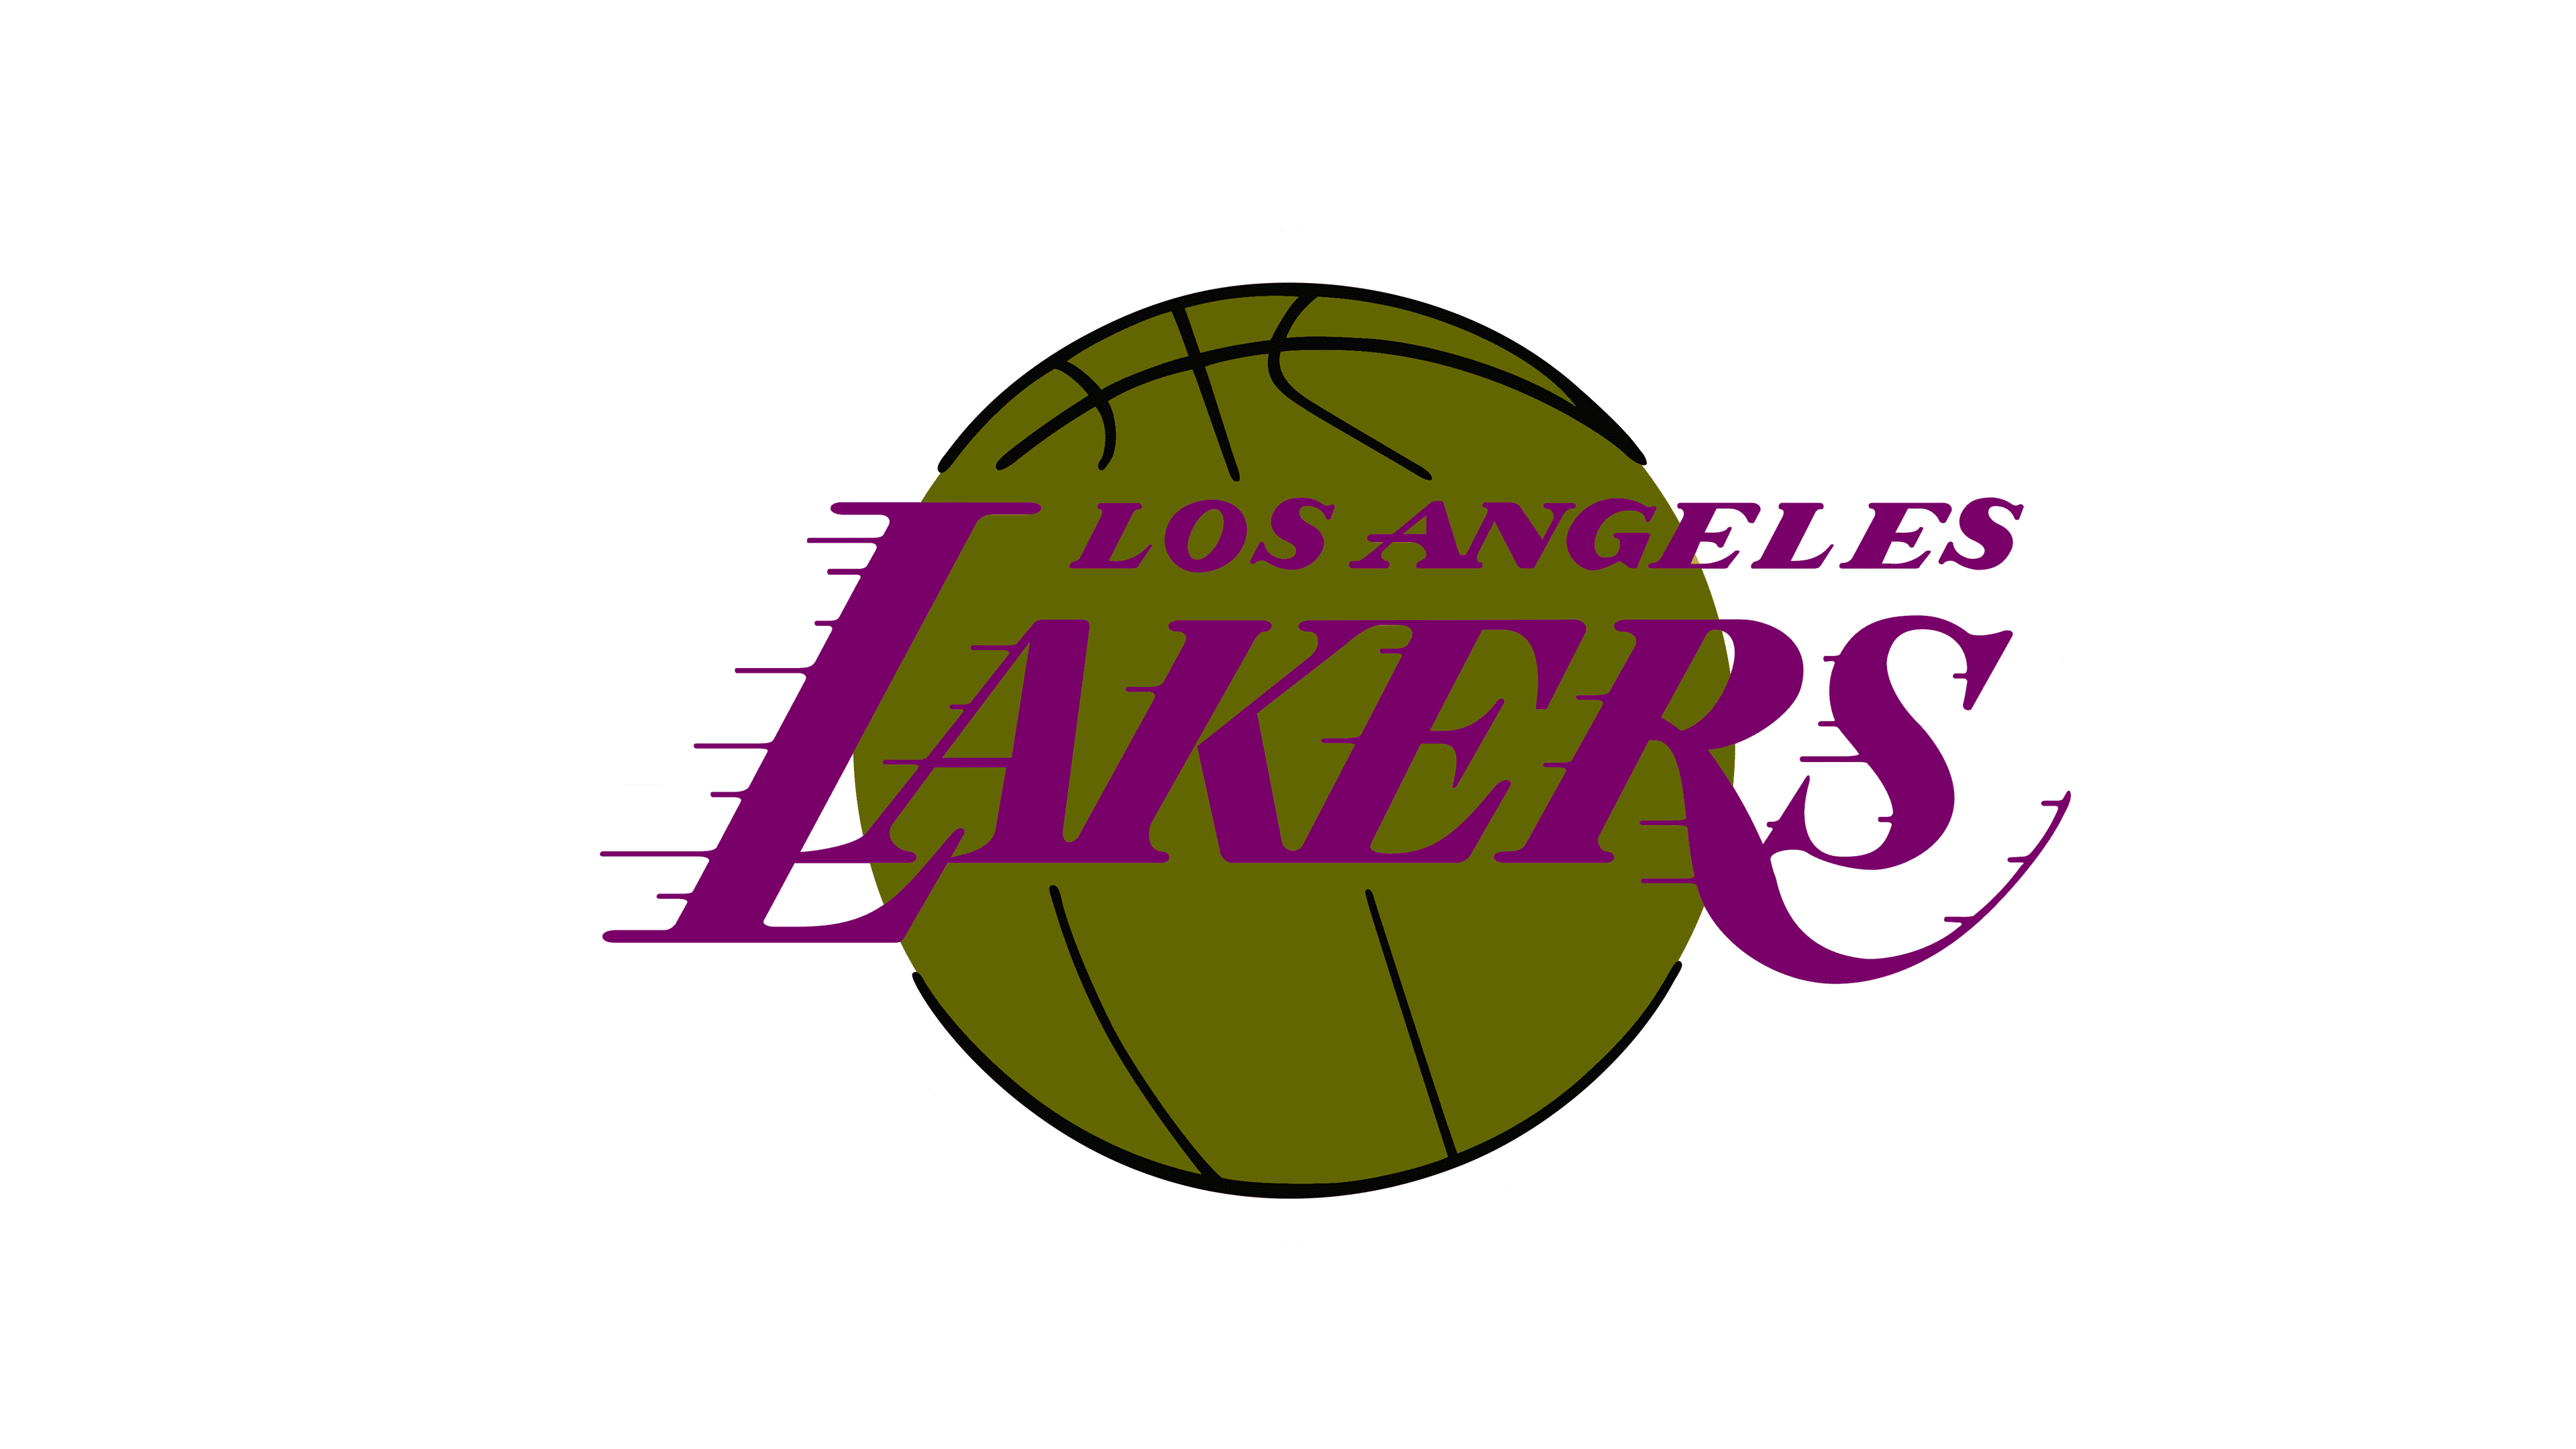 lakers logo